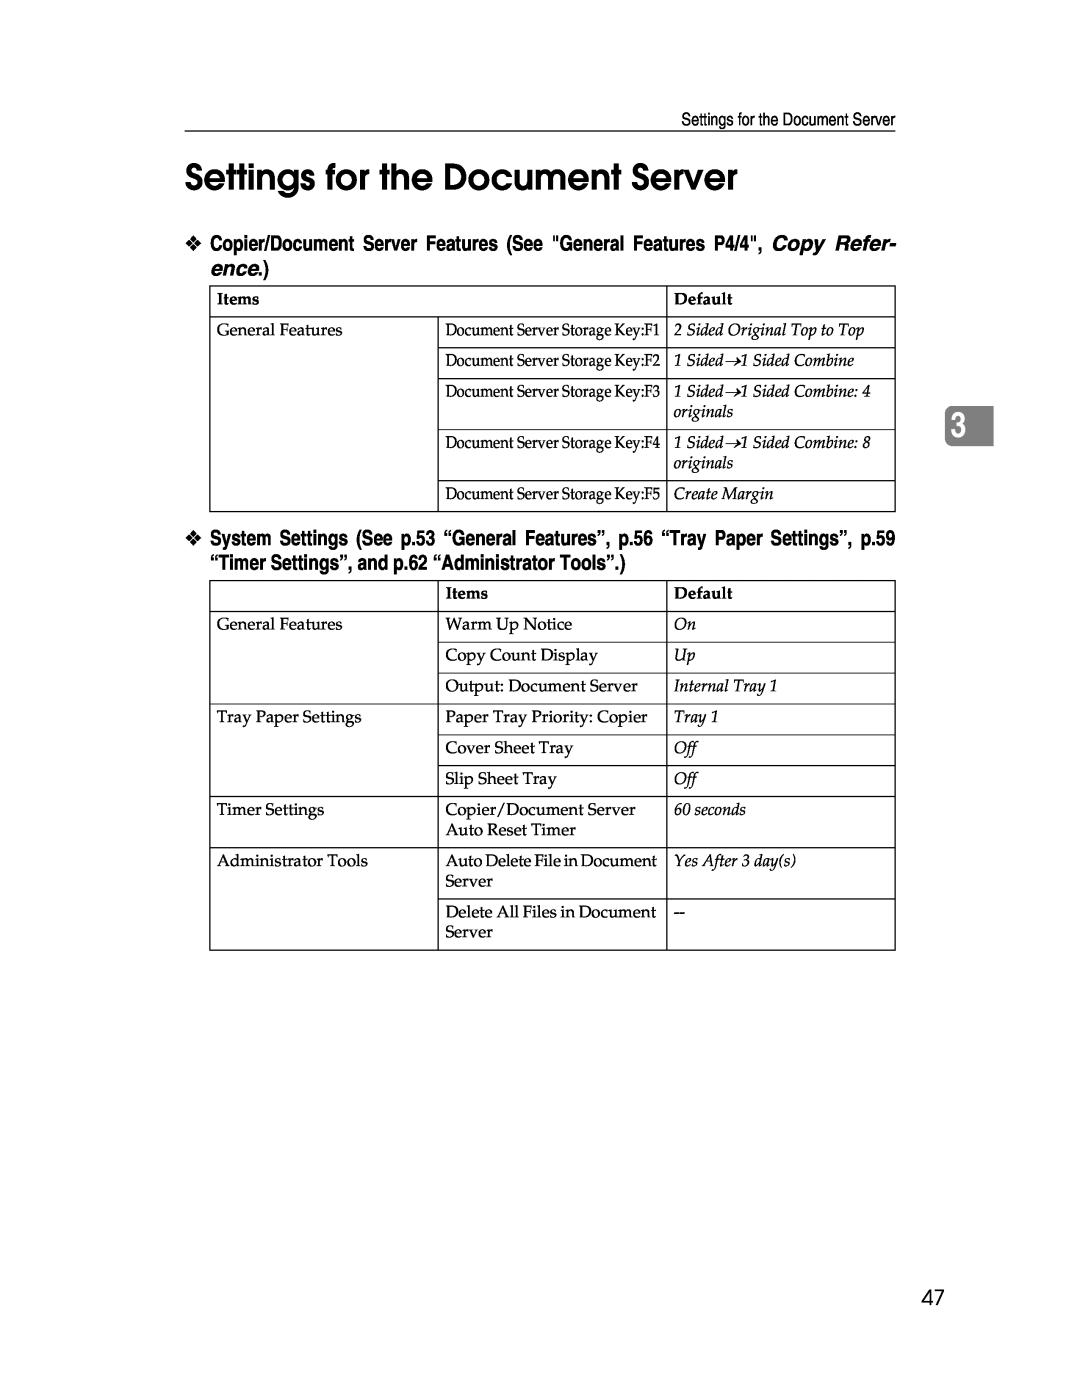 Lanier LD230, LD225 manual Settings for the Document Server, Items, Default 